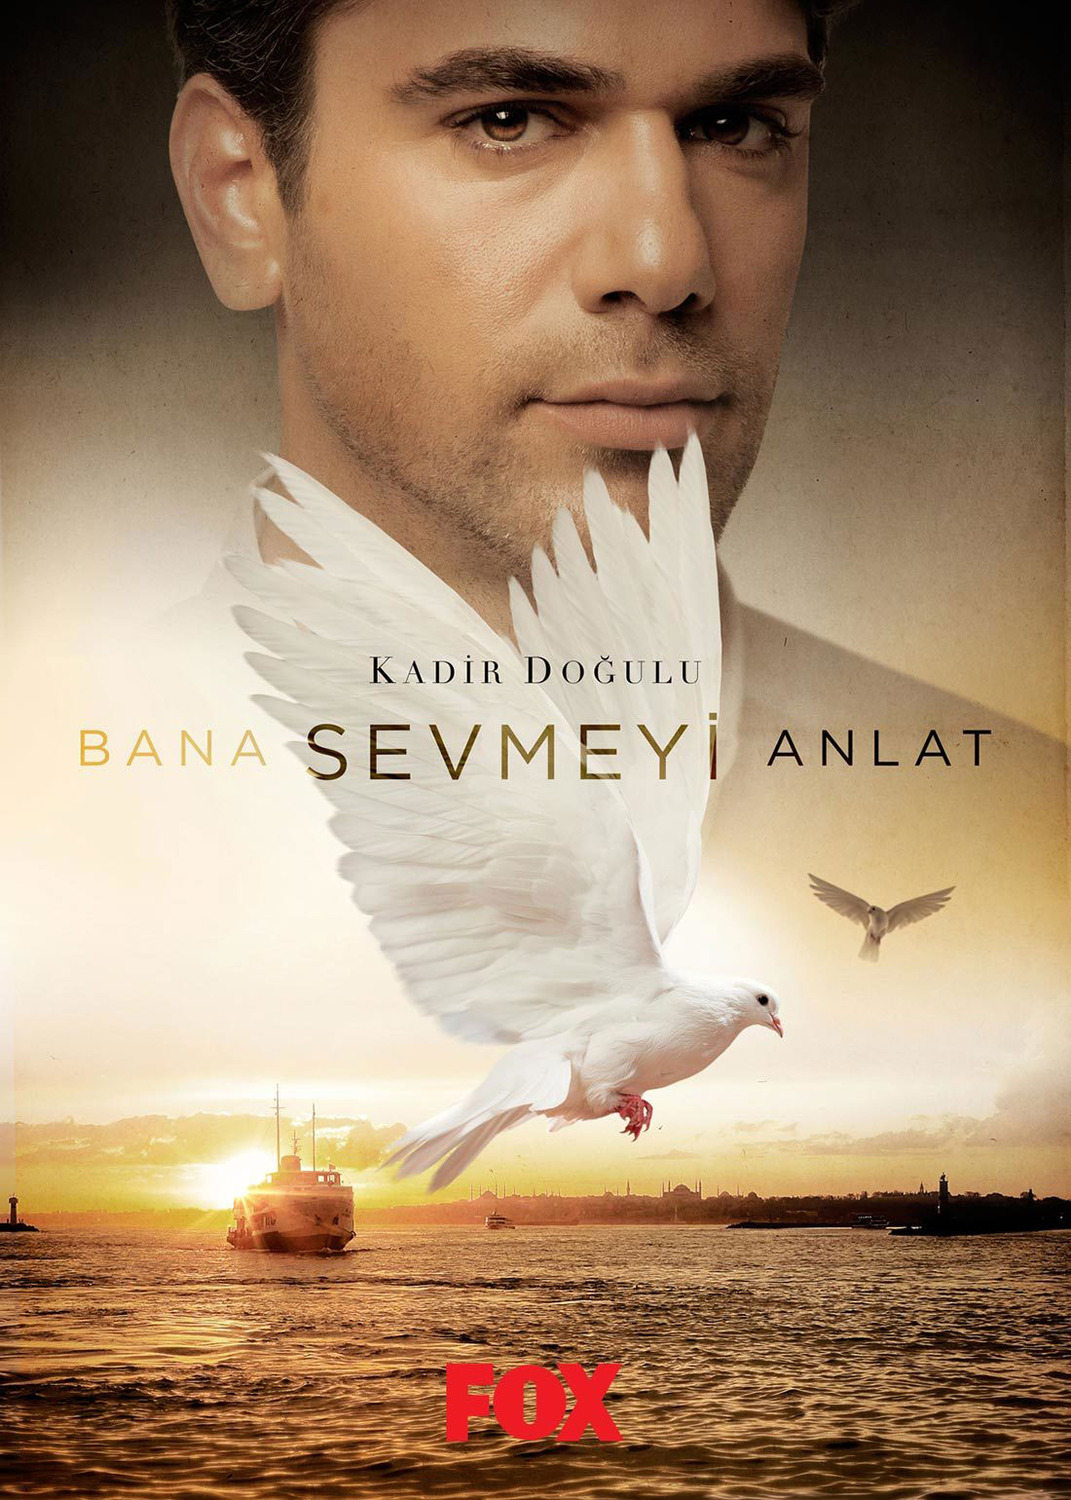 Extra Large TV Poster Image for Bana Sevmeyi Anlat (#4 of 4)